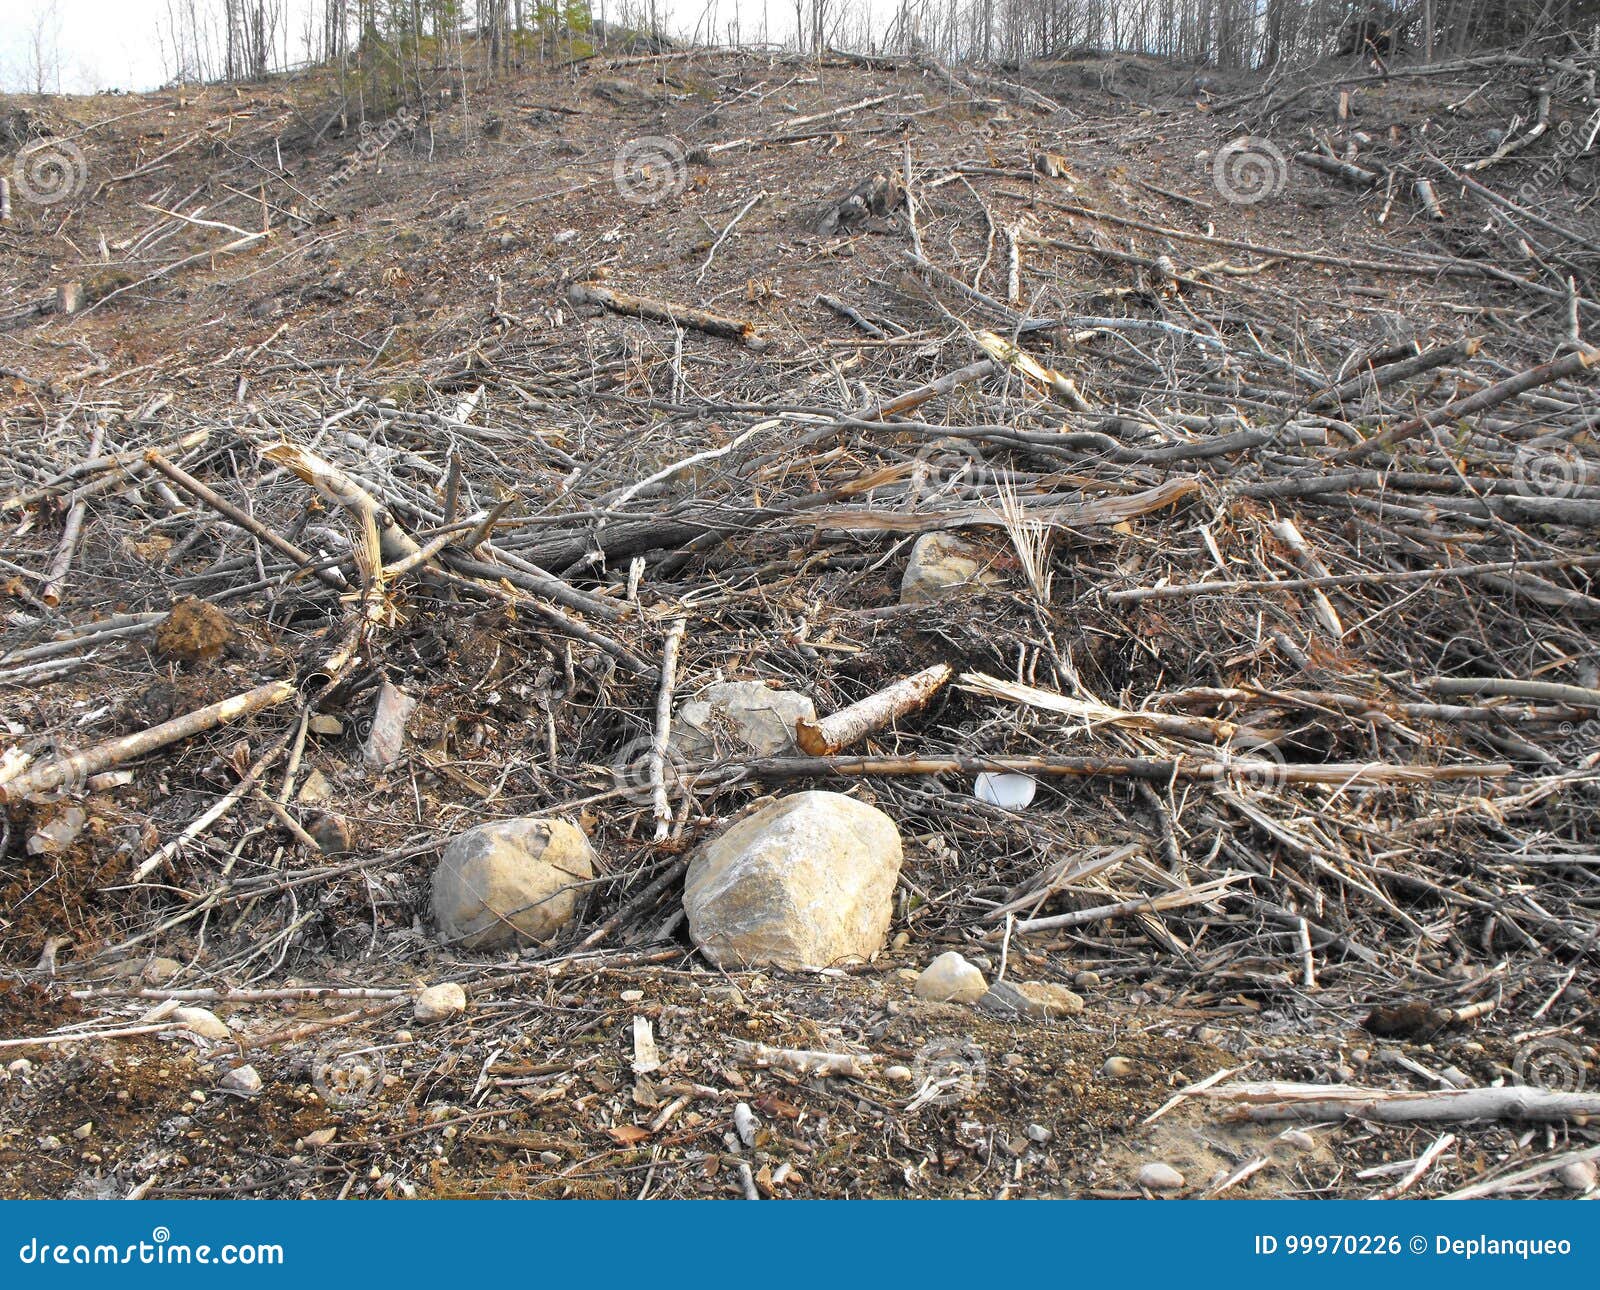 bush destruction in quebec. canada, north america.